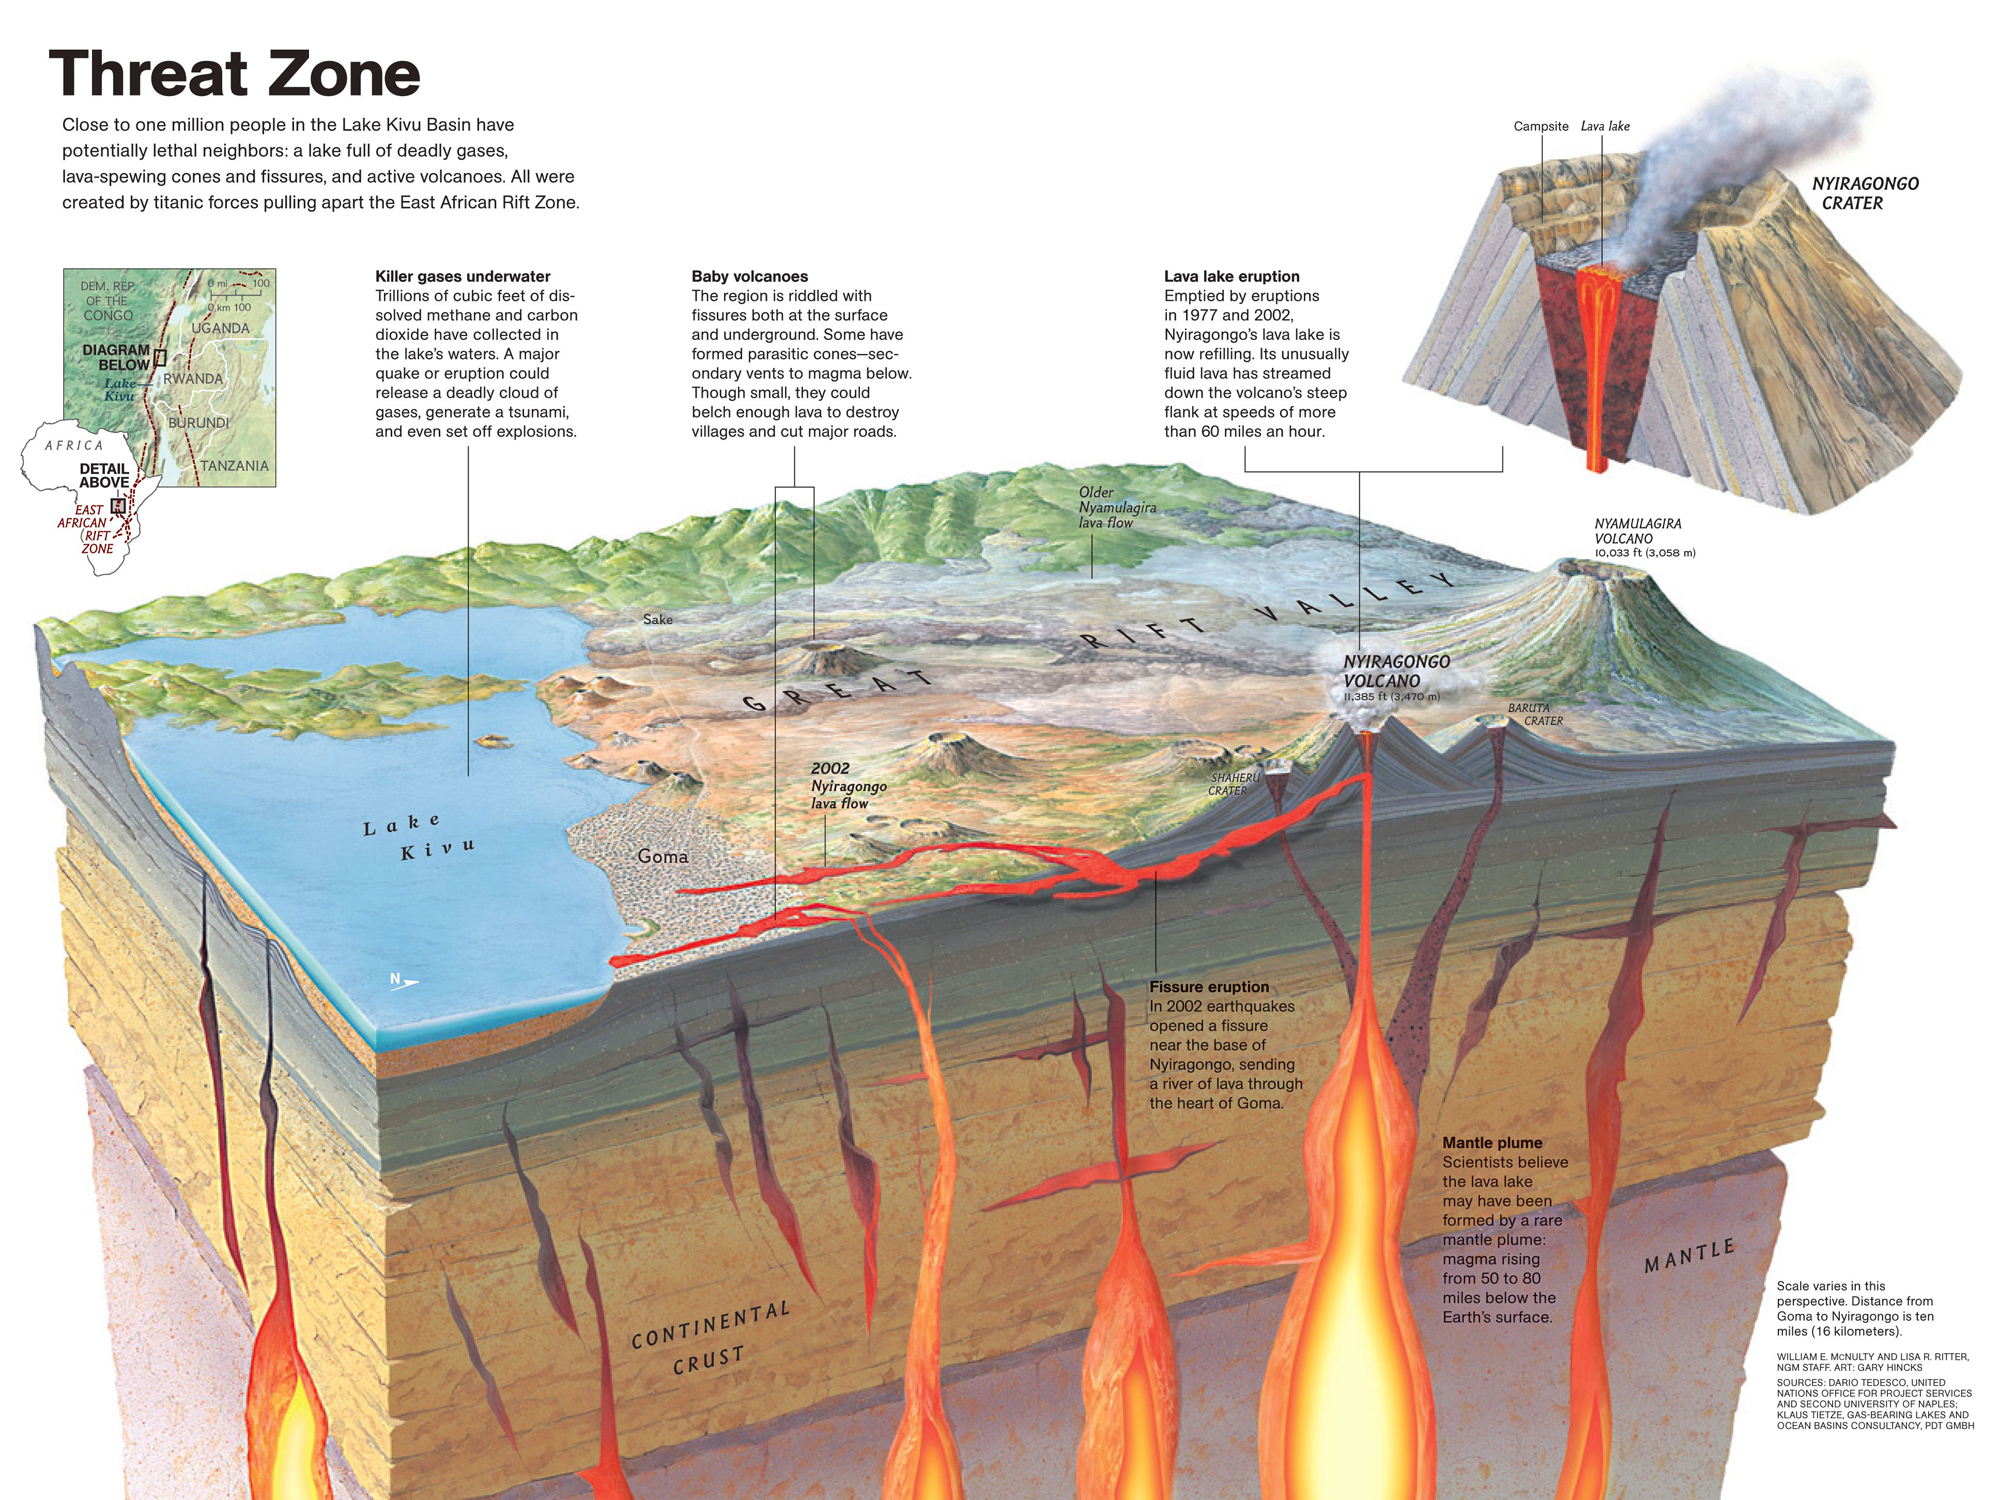 plate tectonics earthquakes and volcanoes